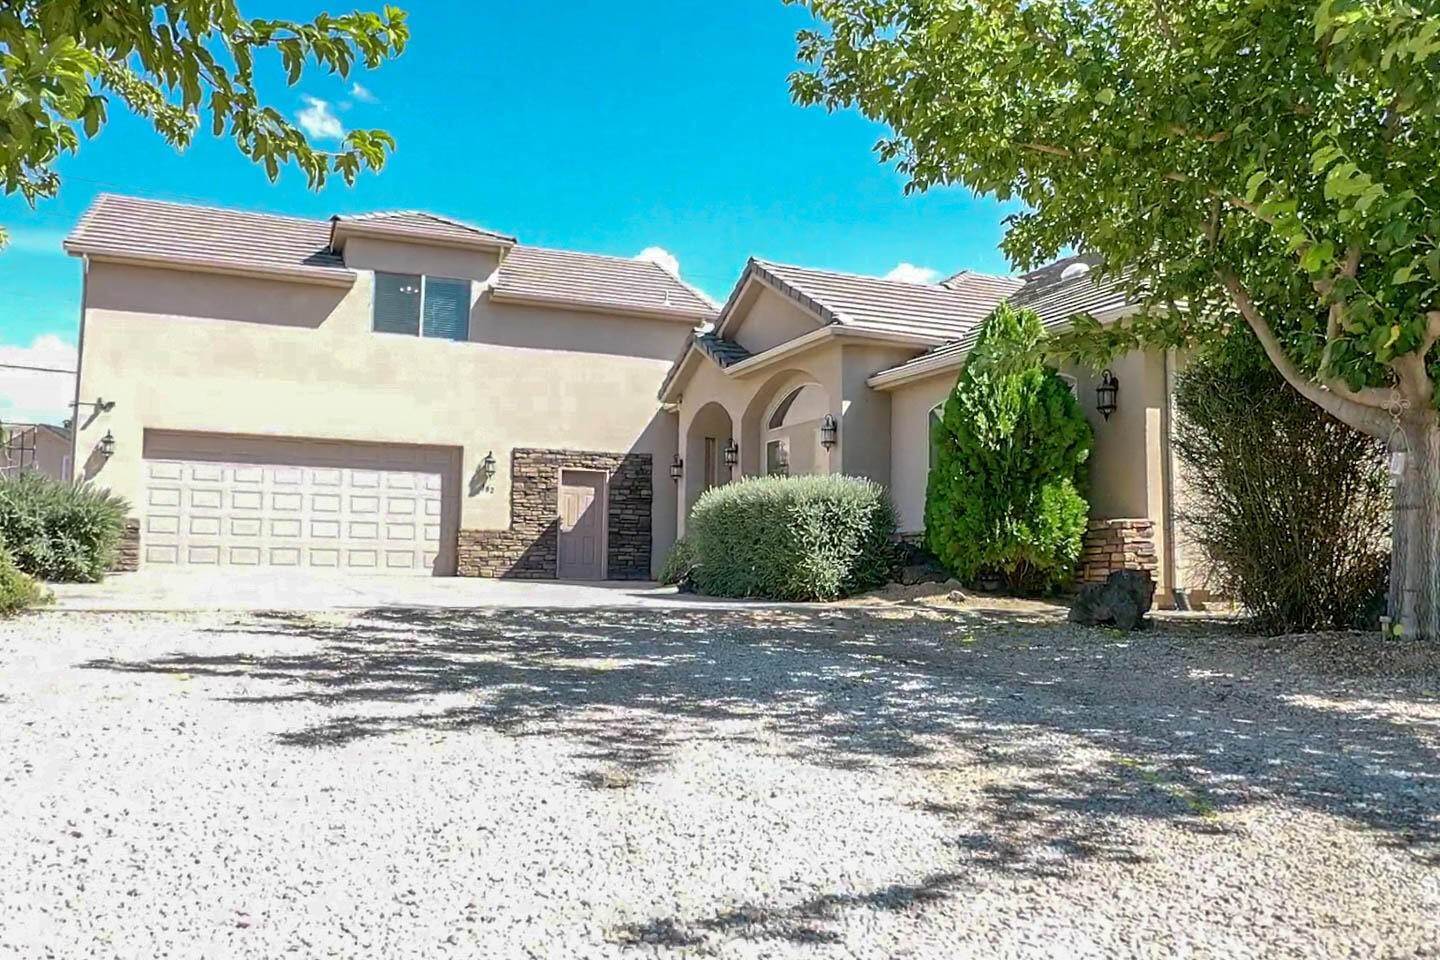 2. Single Family Homes for Sale at 582 360 La Verkin, Utah 84745 United States